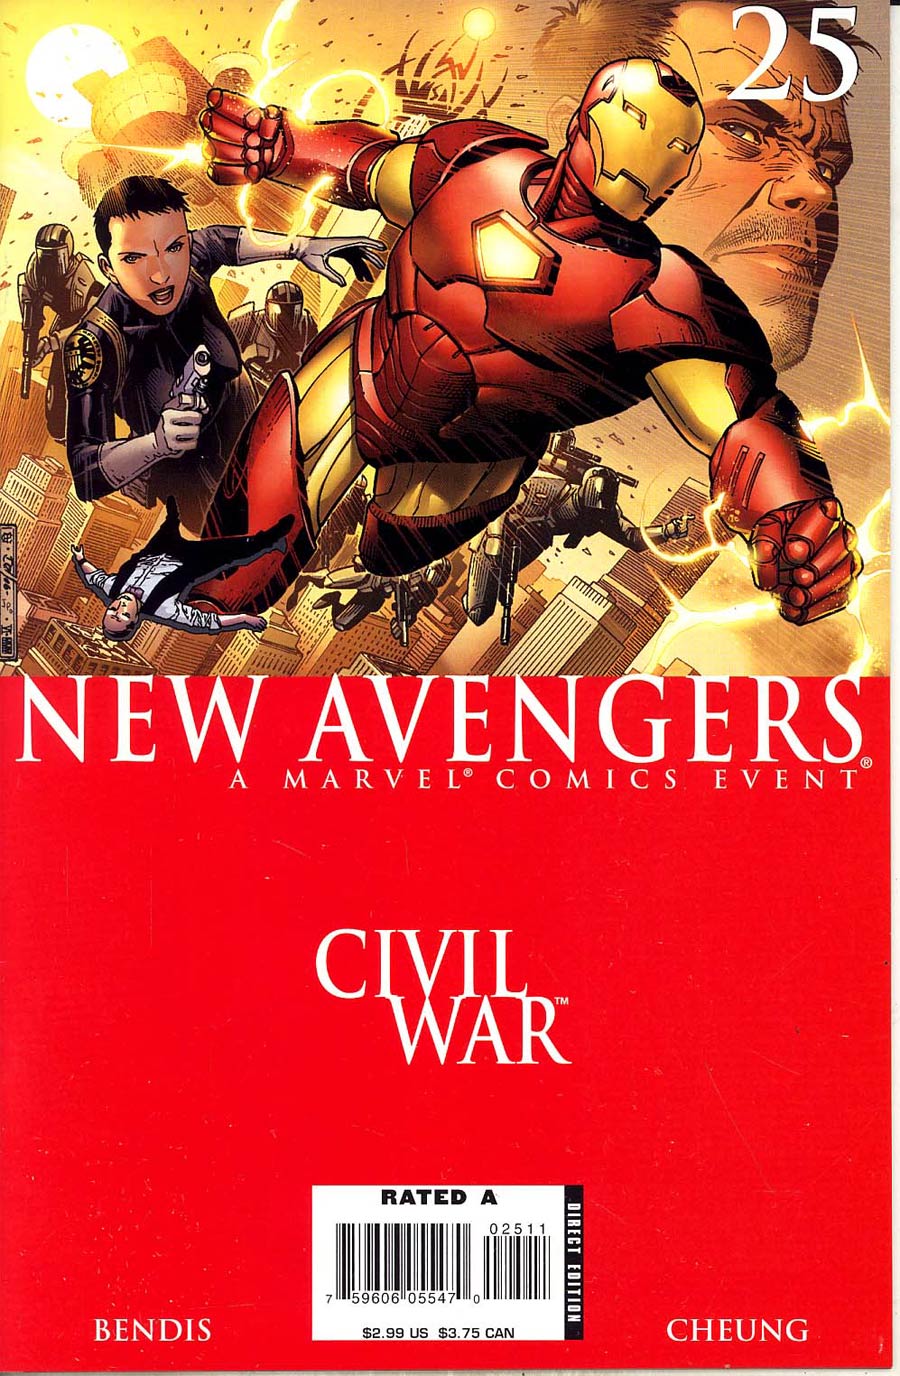 New Avengers #25 (Civil War Tie-In)